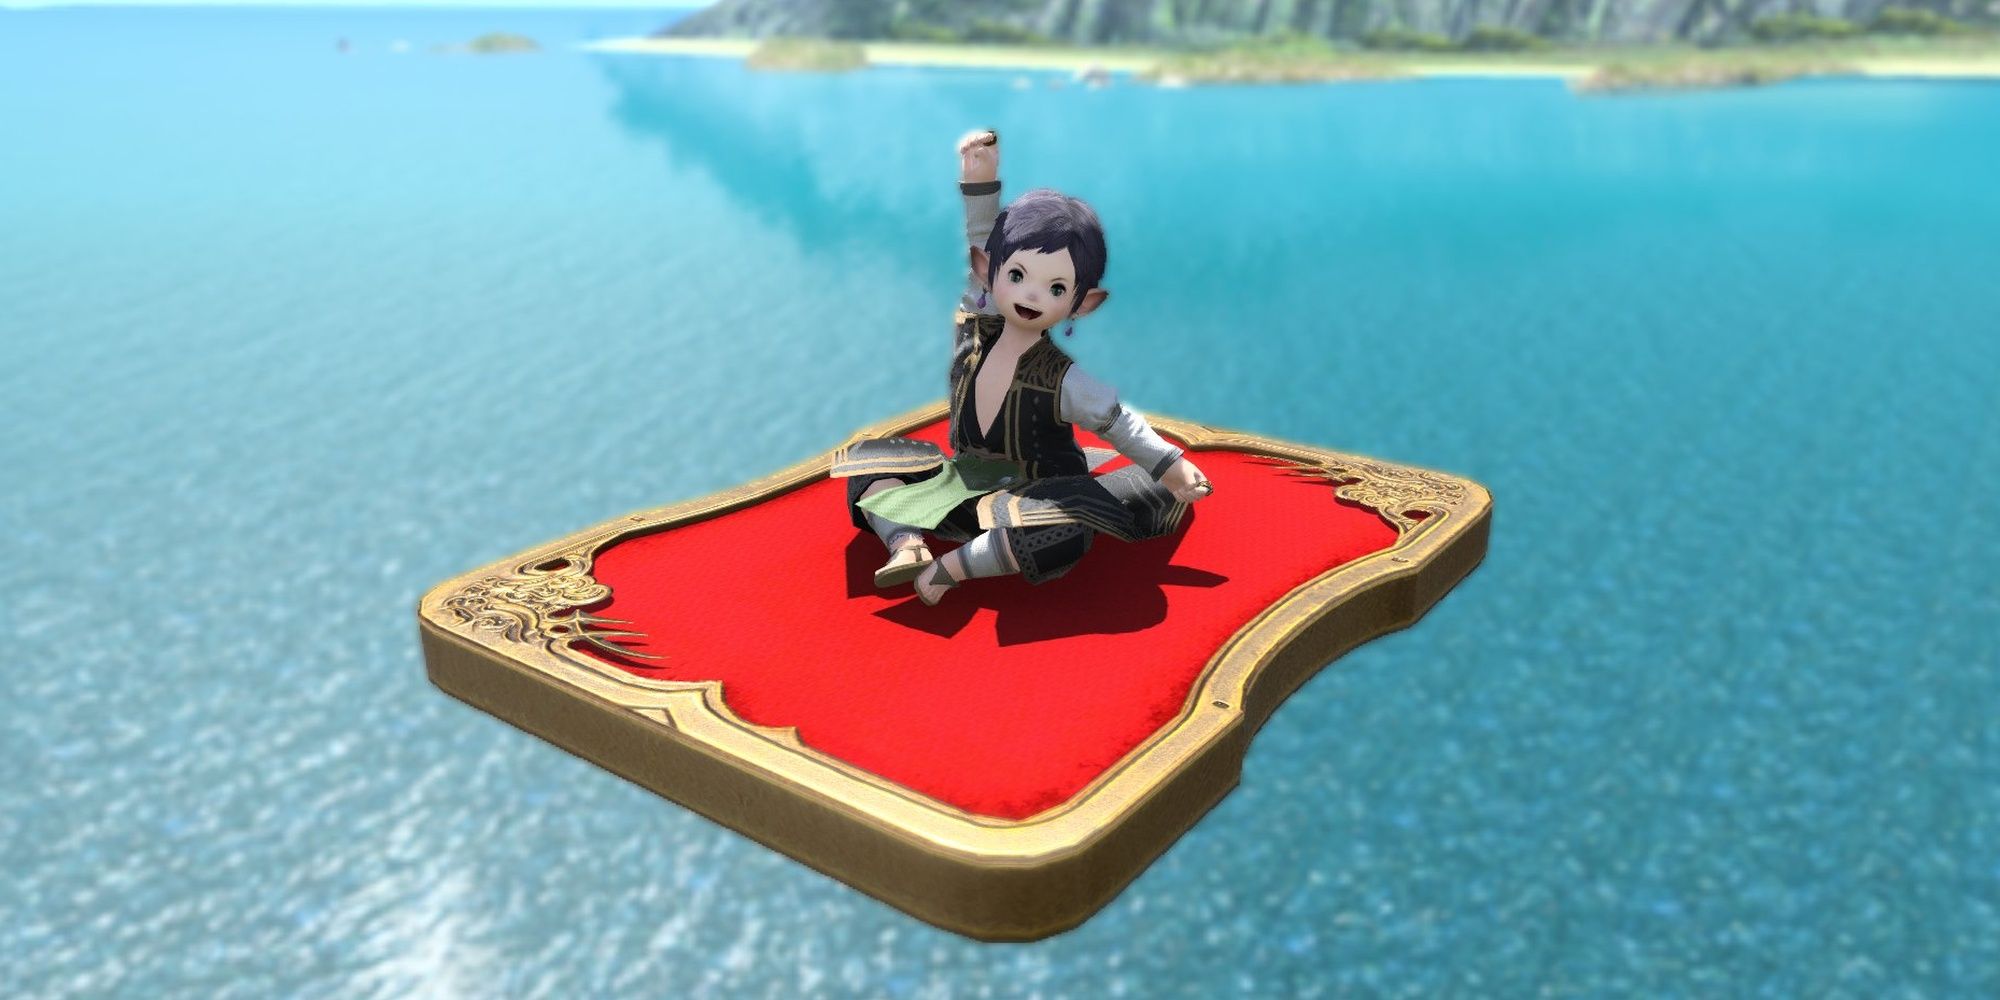 Final Fantasy 14 Lalafel Riding A Giant Triple Triad Card Over The Ocean